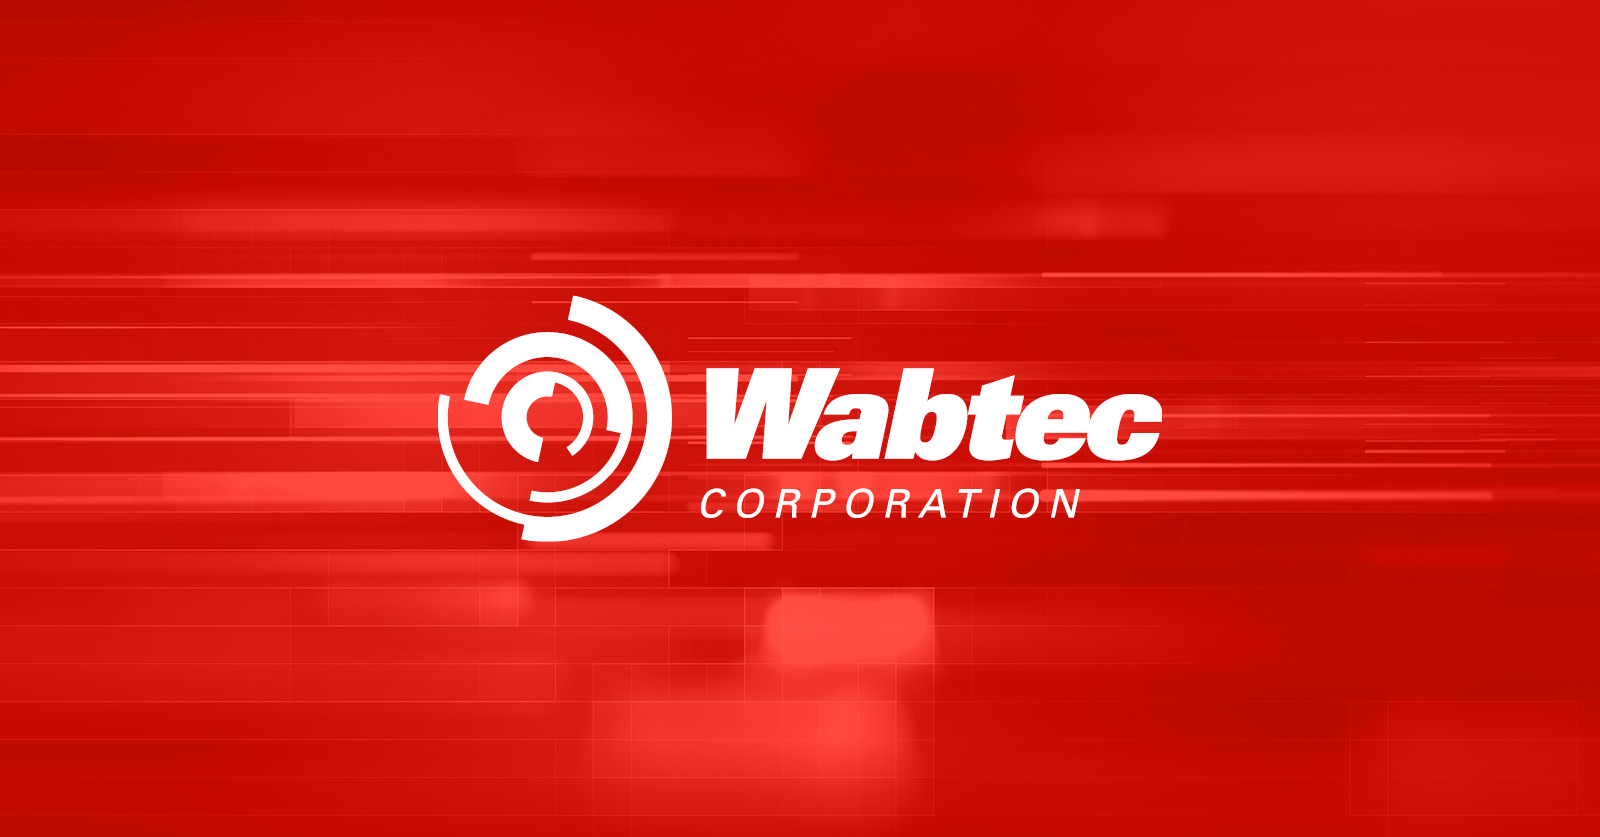 (c) Wabteccorp.com